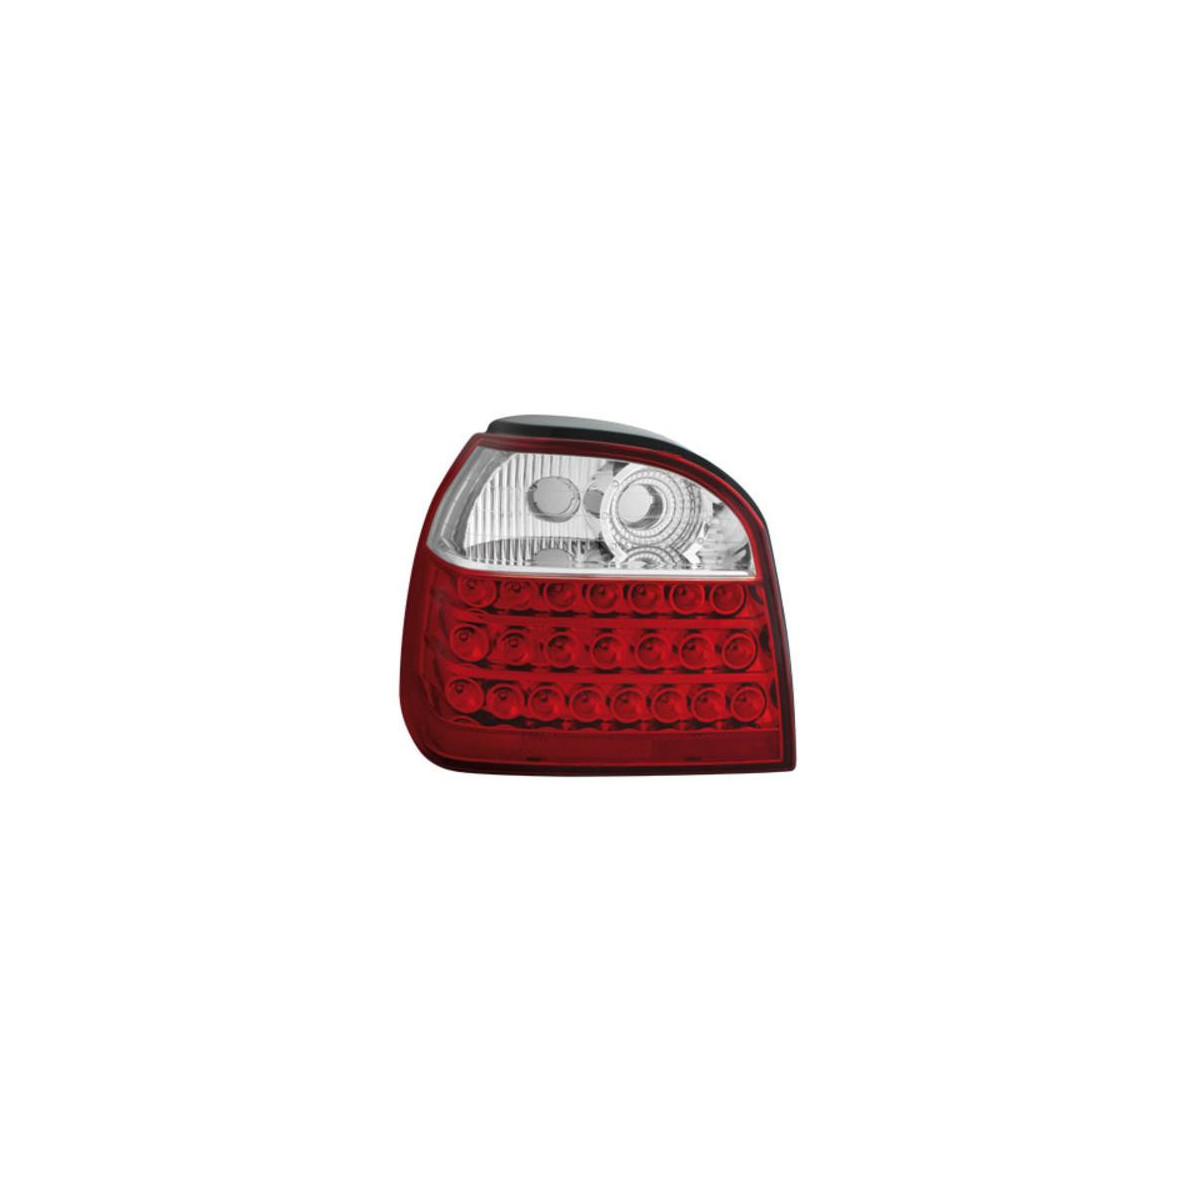 LAMPY TYLNE DIODOWE VW GOLF 3 9/91-8/97 RED WHITE LED